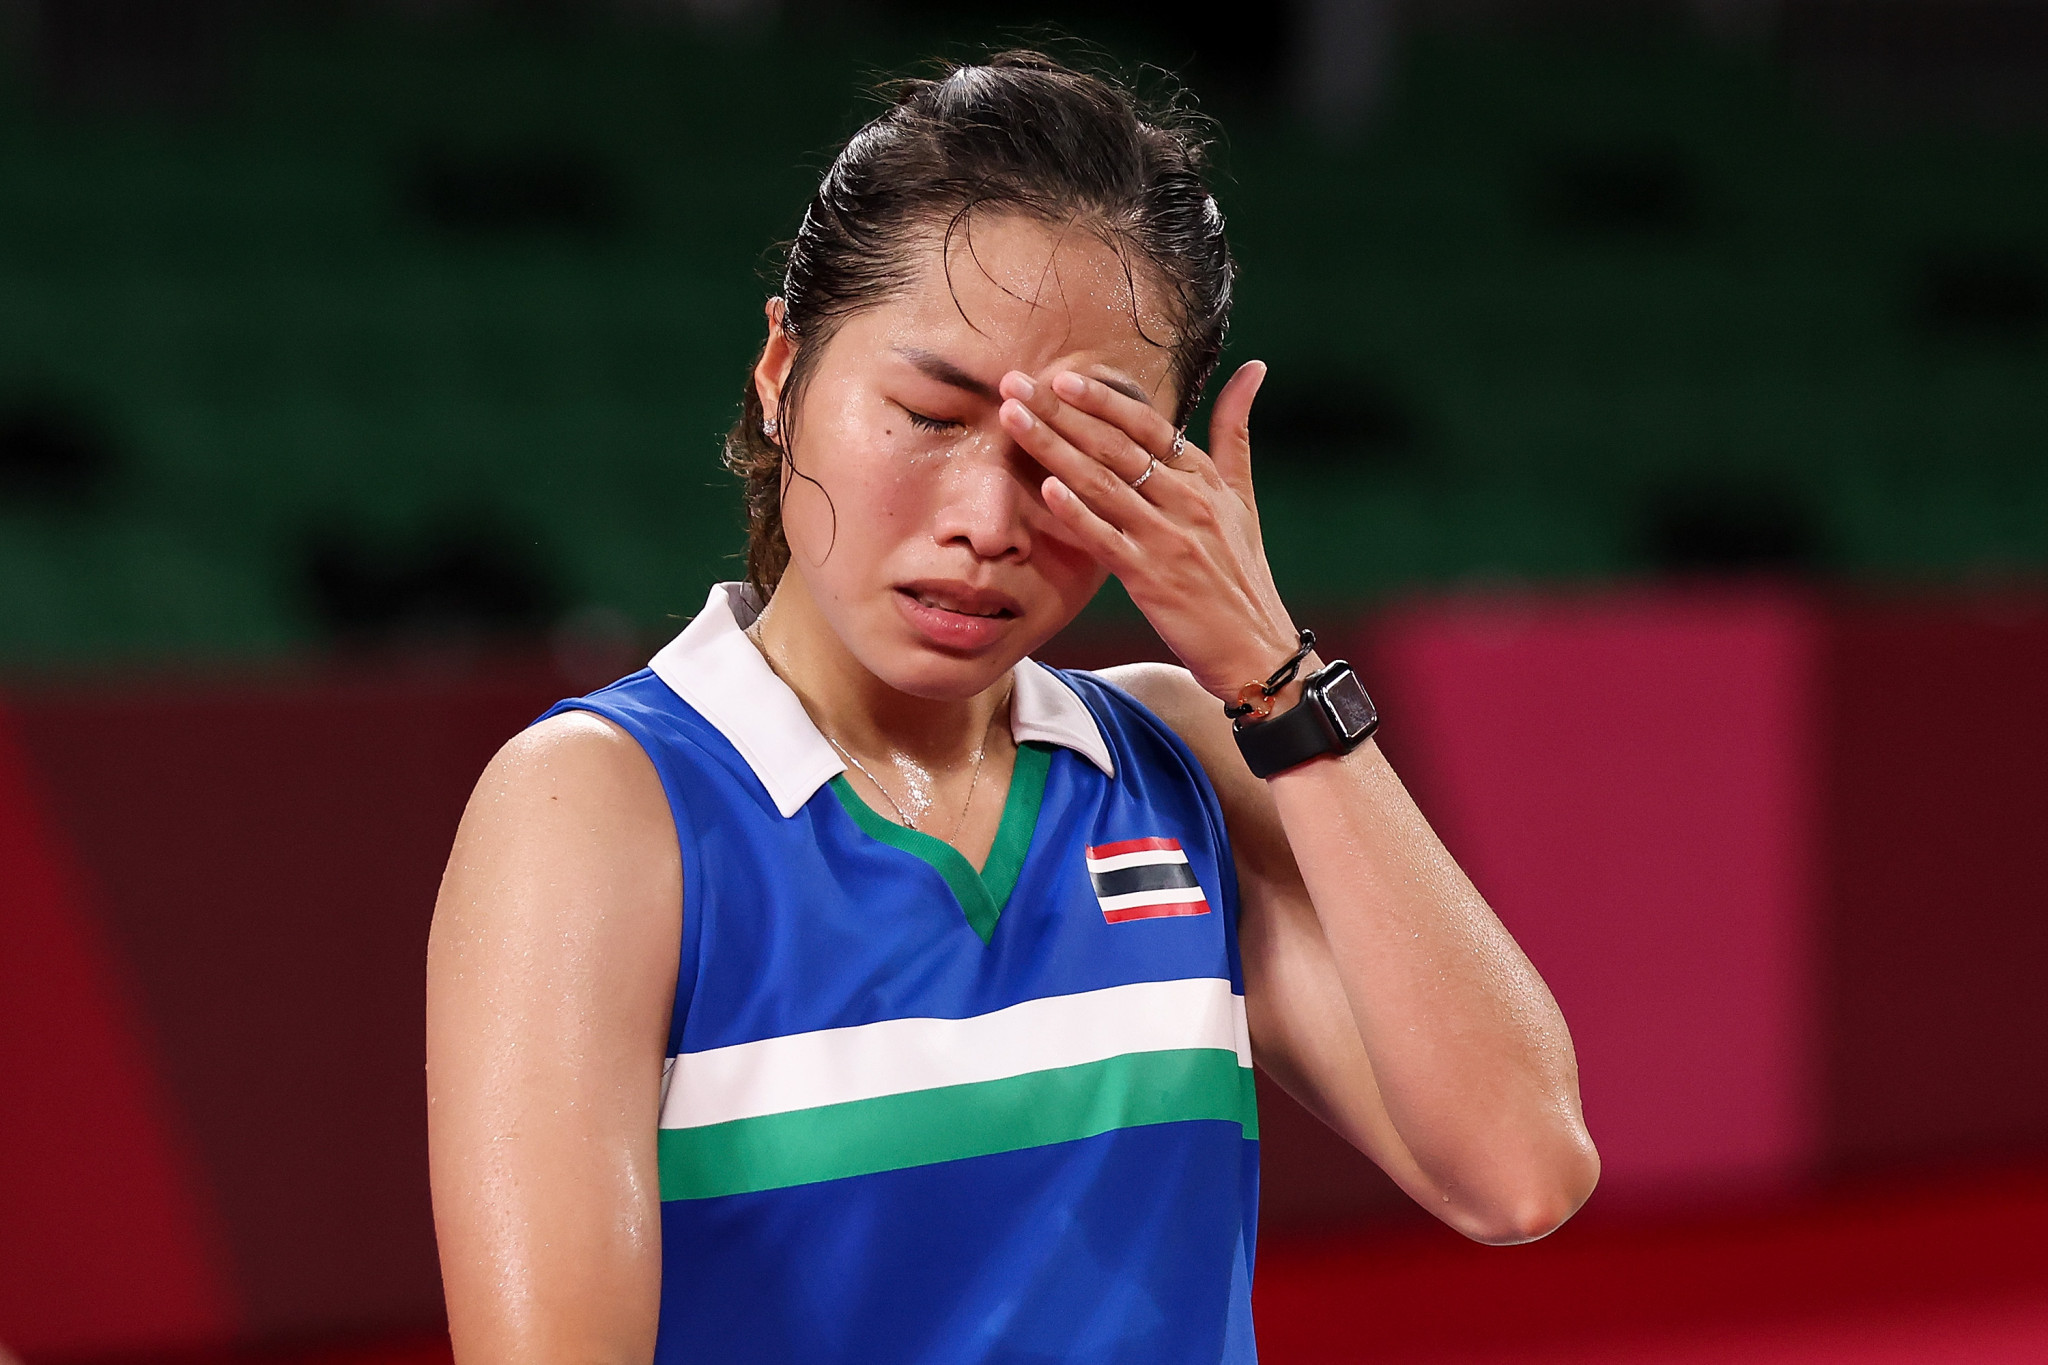 Rachankok Intanon was beaten in the women's singles second round ©Getty Images